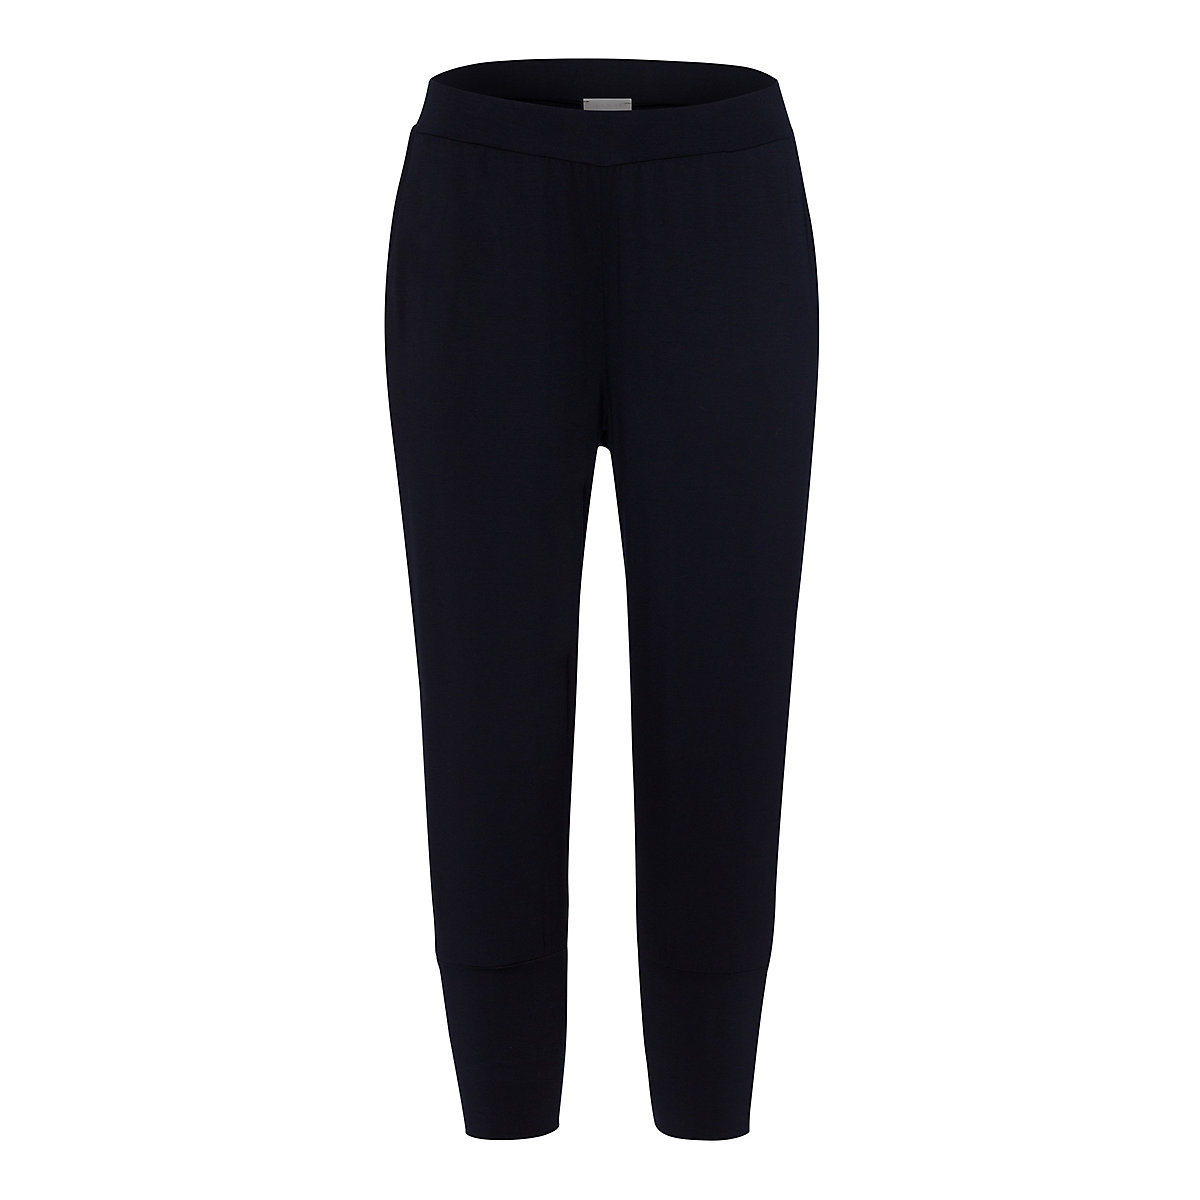 HANRO 3/4 Pants Yoga Jerseyhosen schwarz